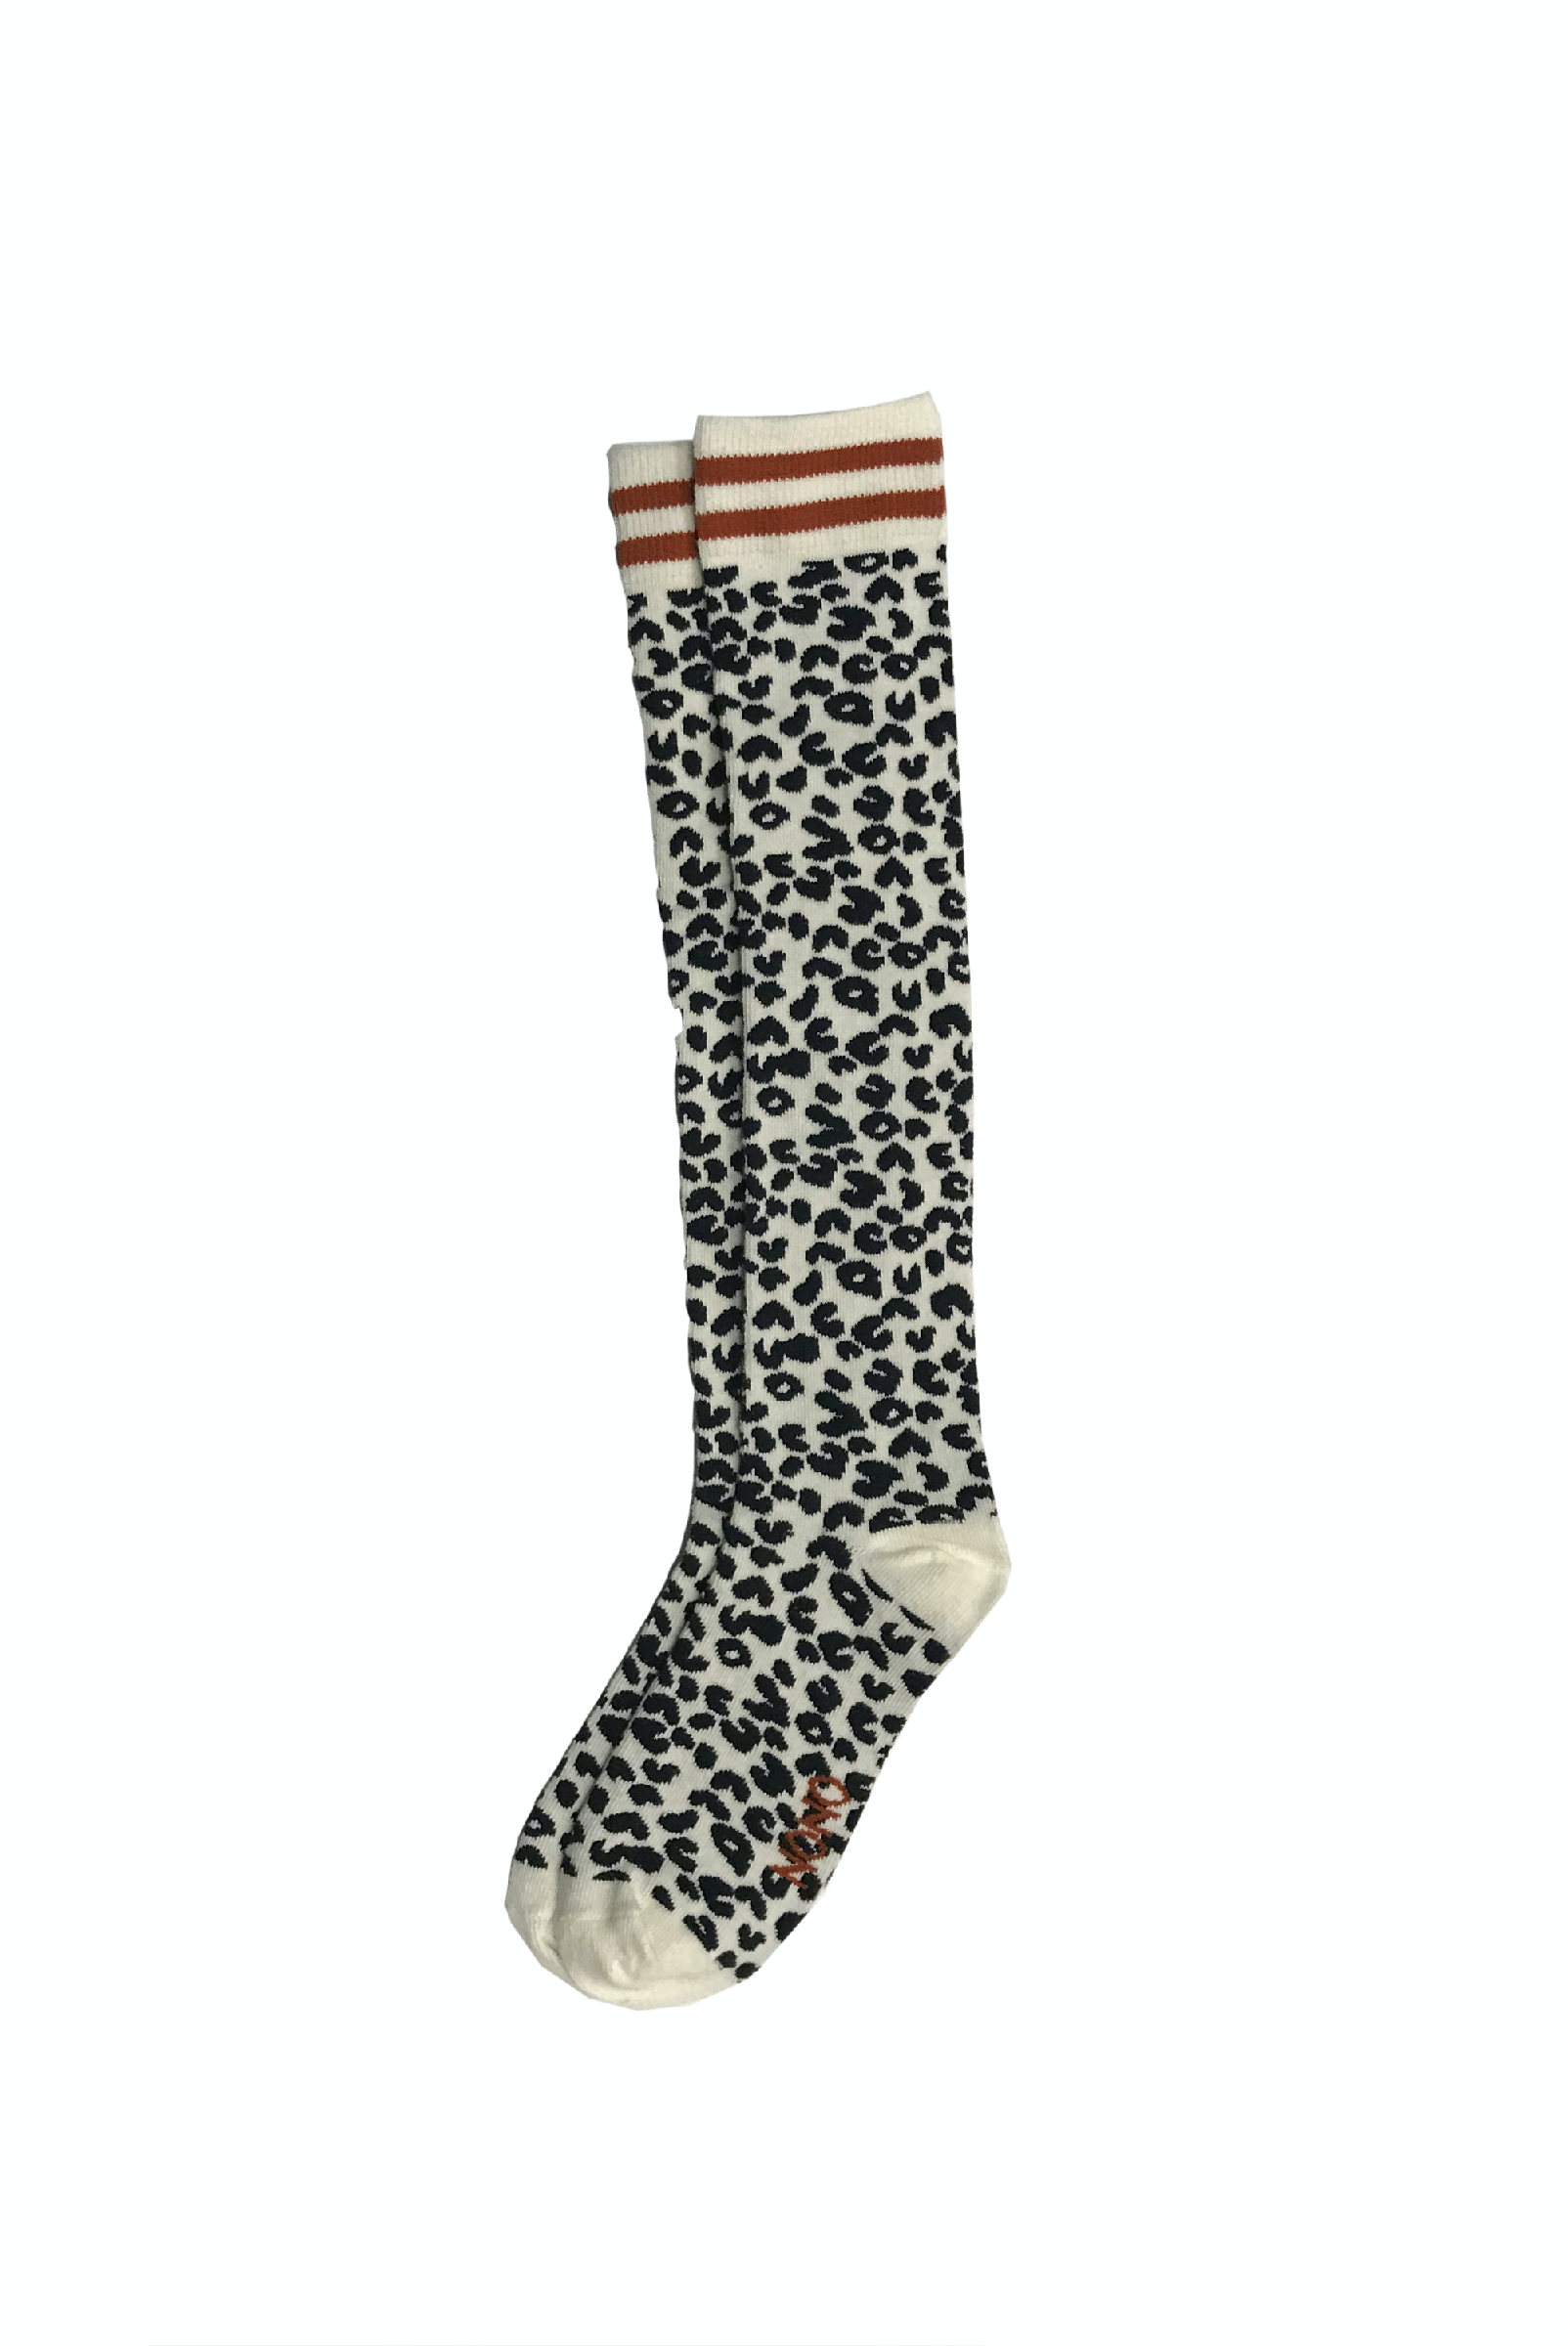 Meisjes Ranim blk/wht leopard sock van NoNo in de kleur Snow White in maat L.